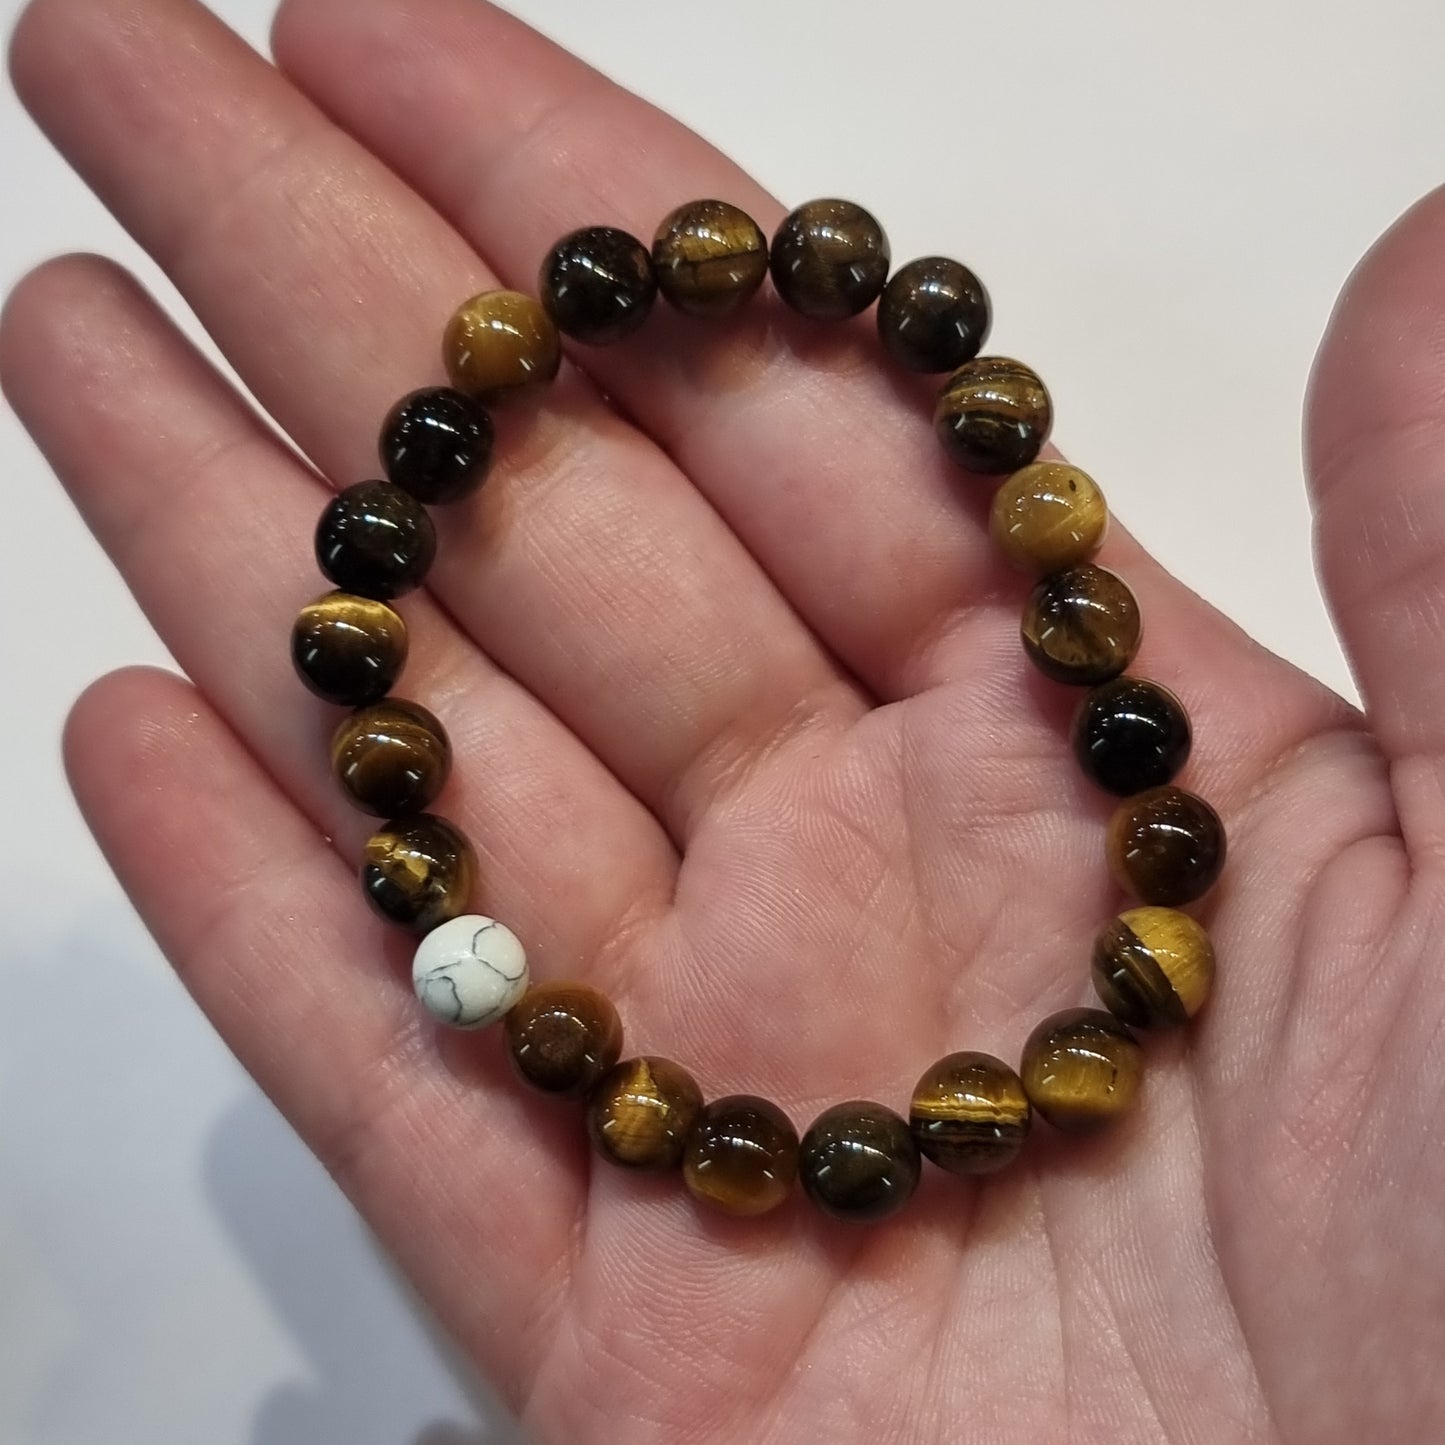 Tiger eye bracelet with Howlite bead - Rivendell Shop